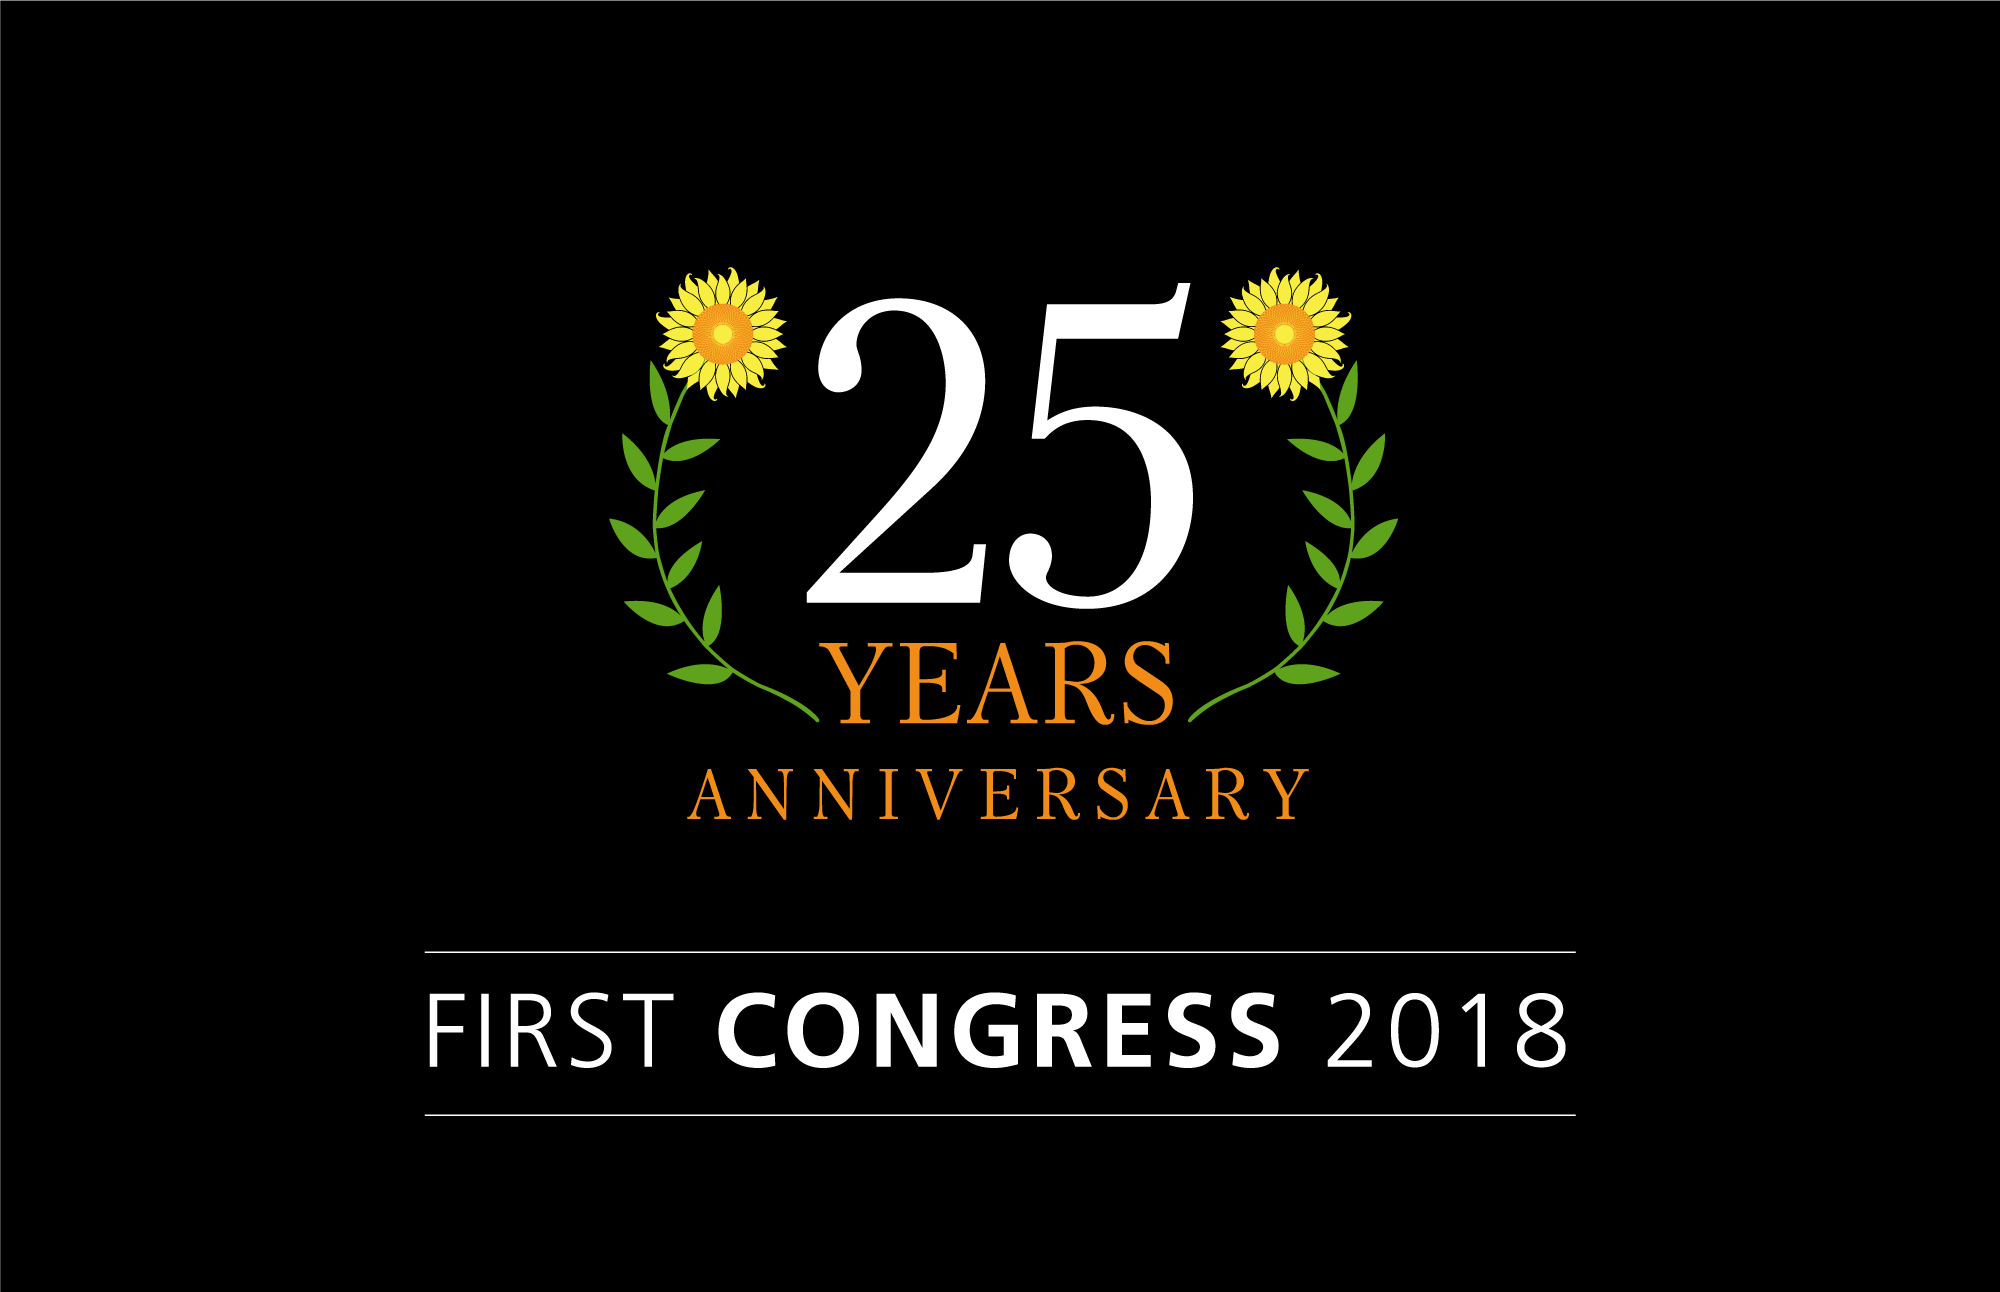 First Congress 2018 - Happy 25 Anniversary